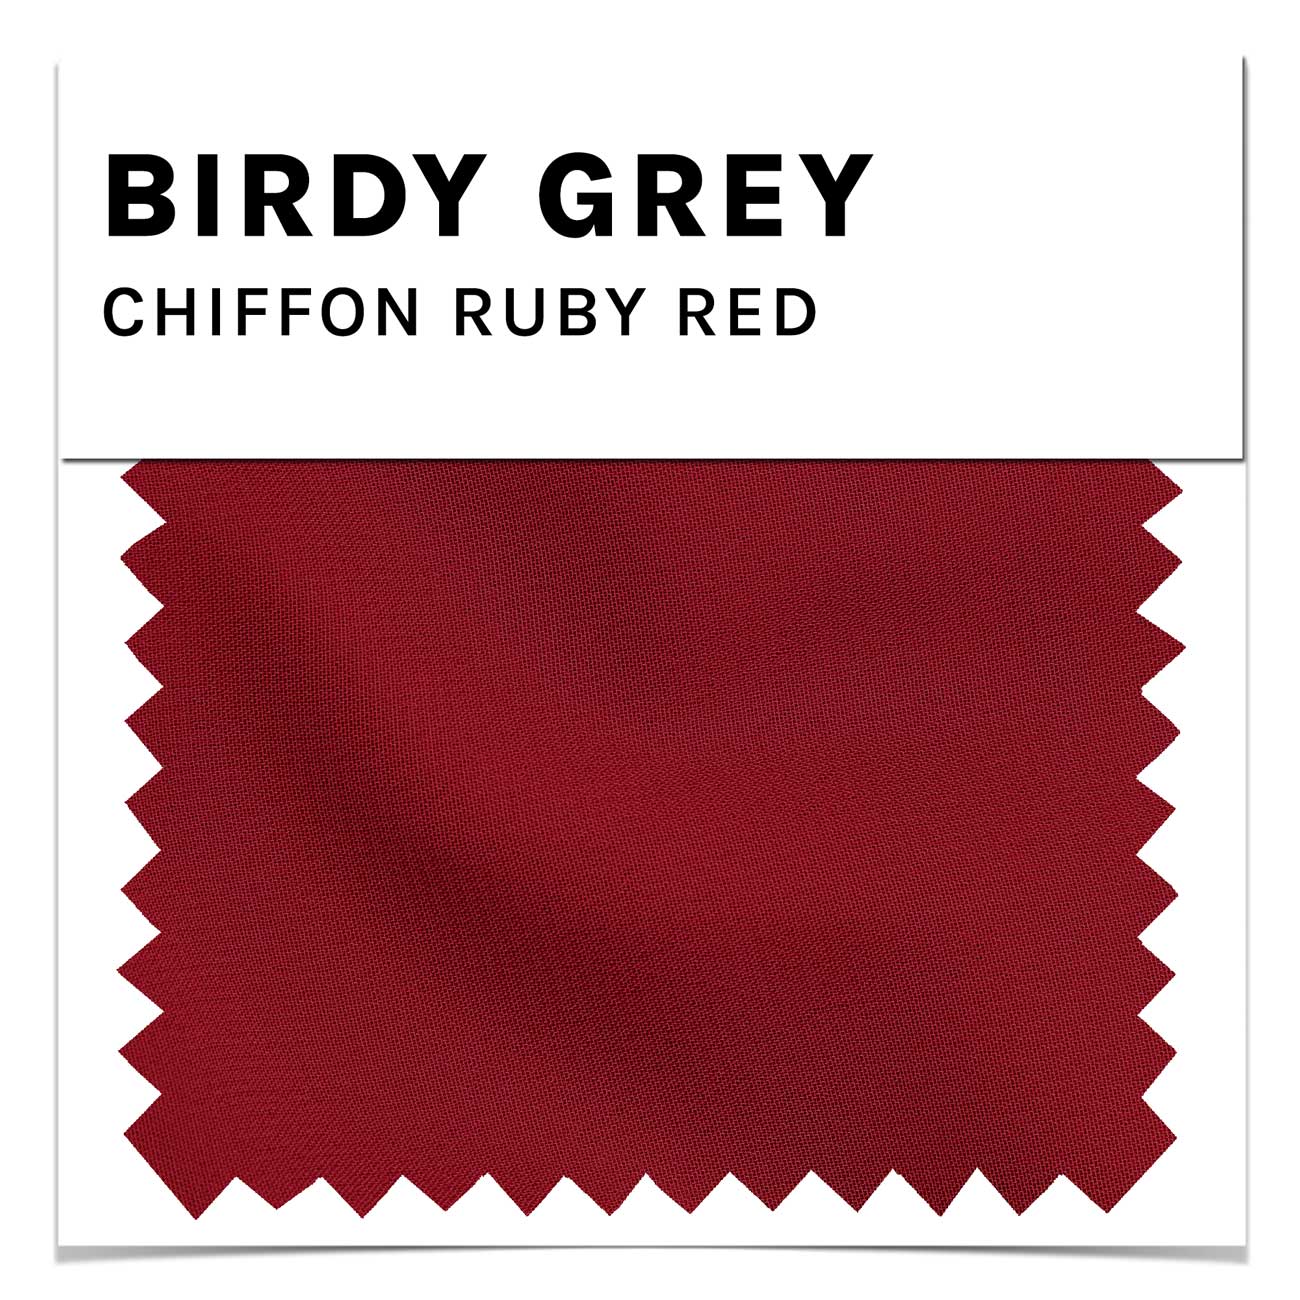 Ruby Red Chiffon Swatch by Birdy Grey